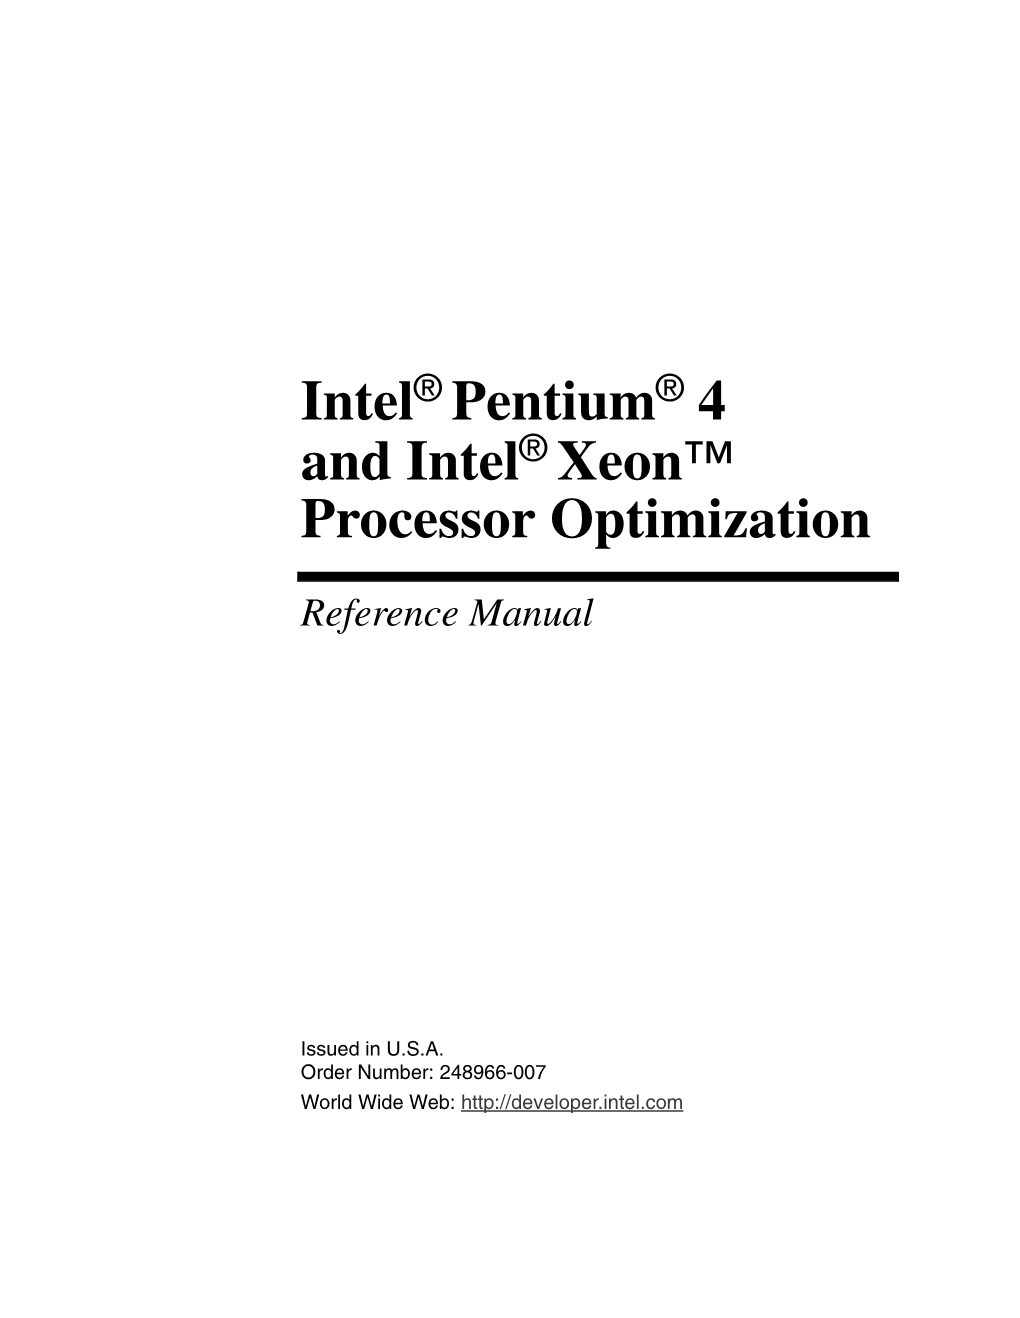 Intel Pentium 4 and Intel Xeon Processor Optimization